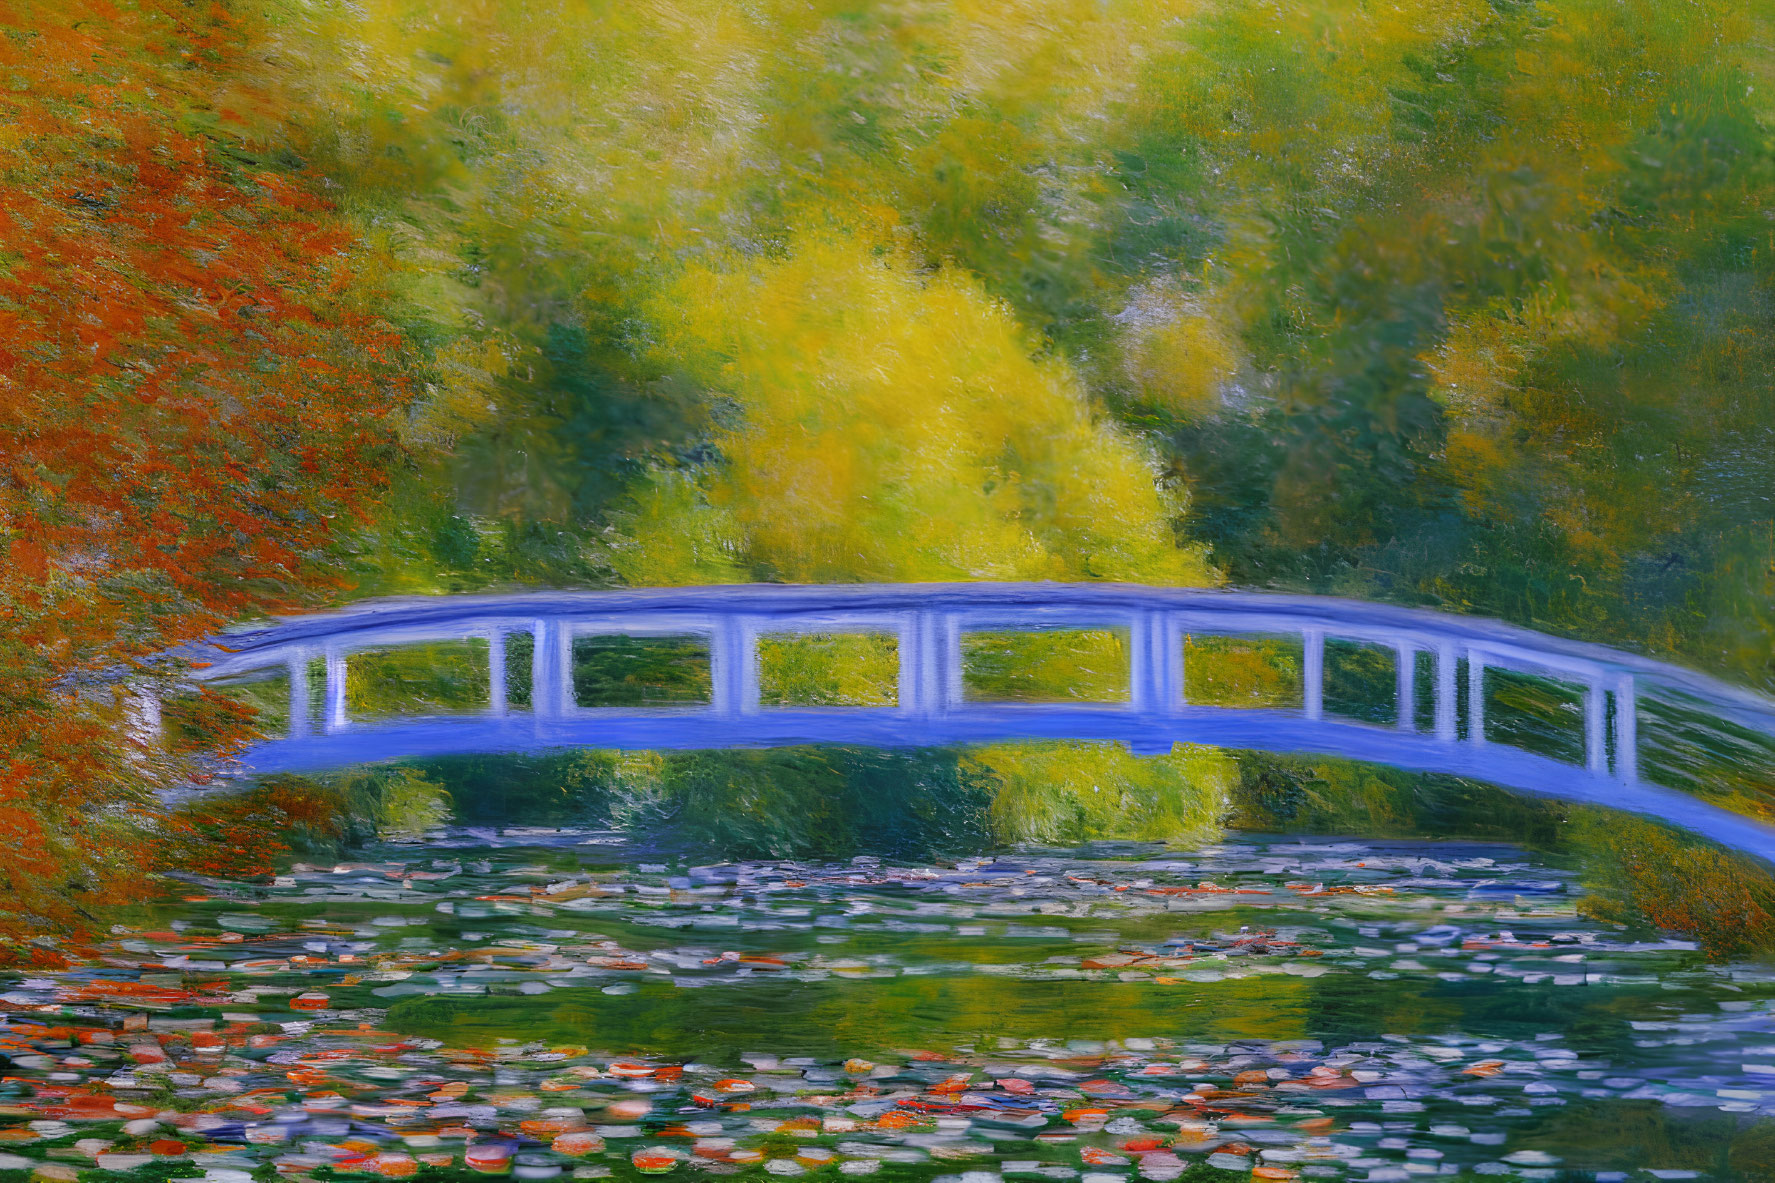 Vibrant impressionistic painting: Blue arched bridge, lily pond, autumn trees